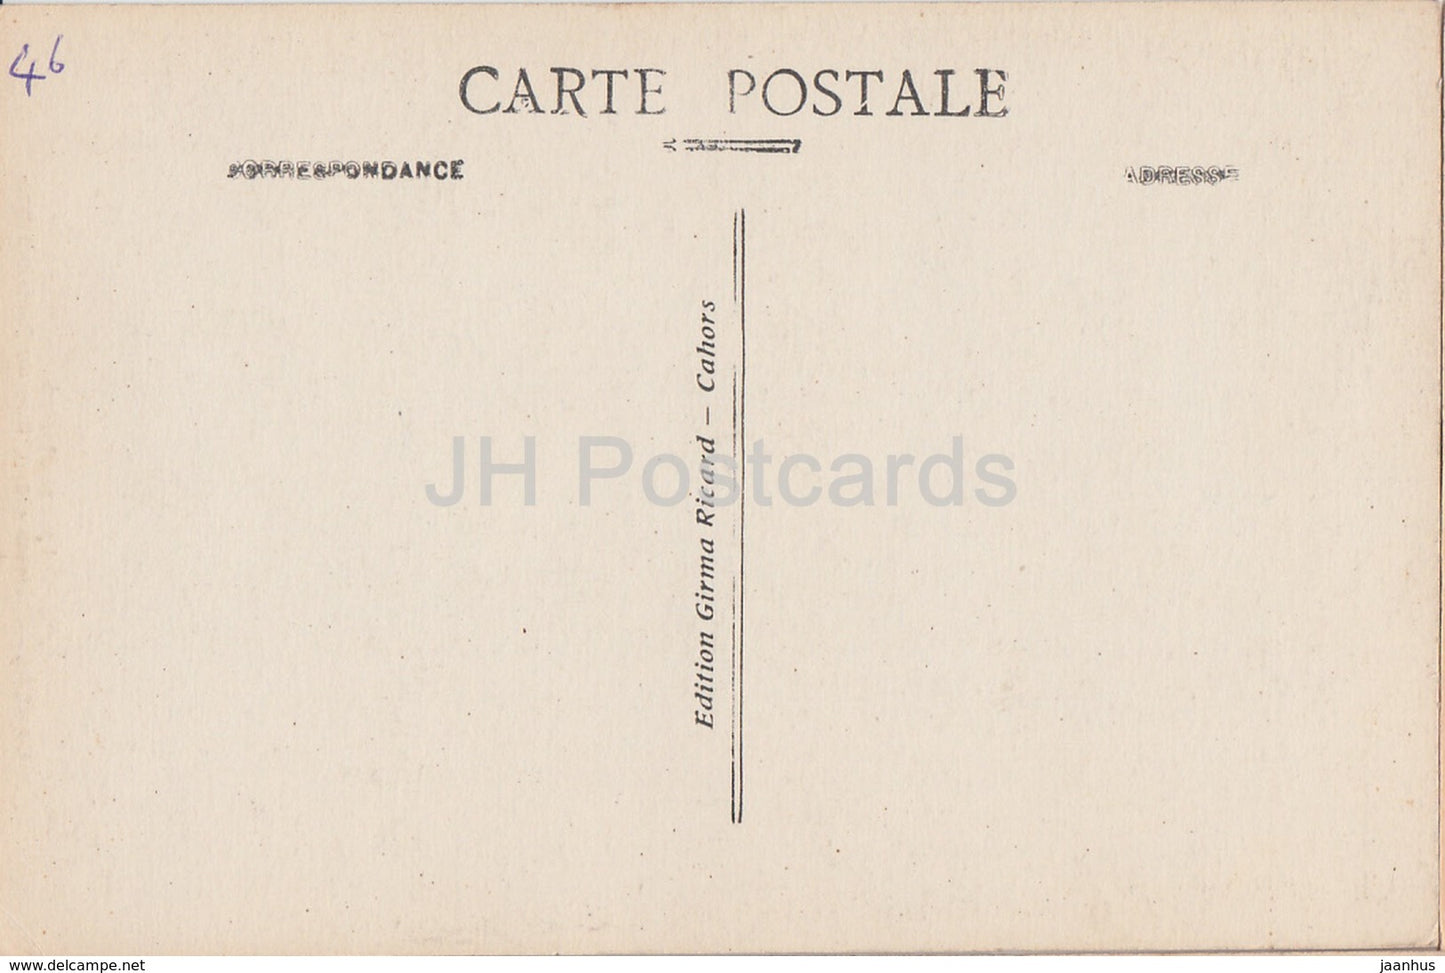 Cahors - Château Alban - Rue du Portail Alban - château - carte postale ancienne - France - inutilisée